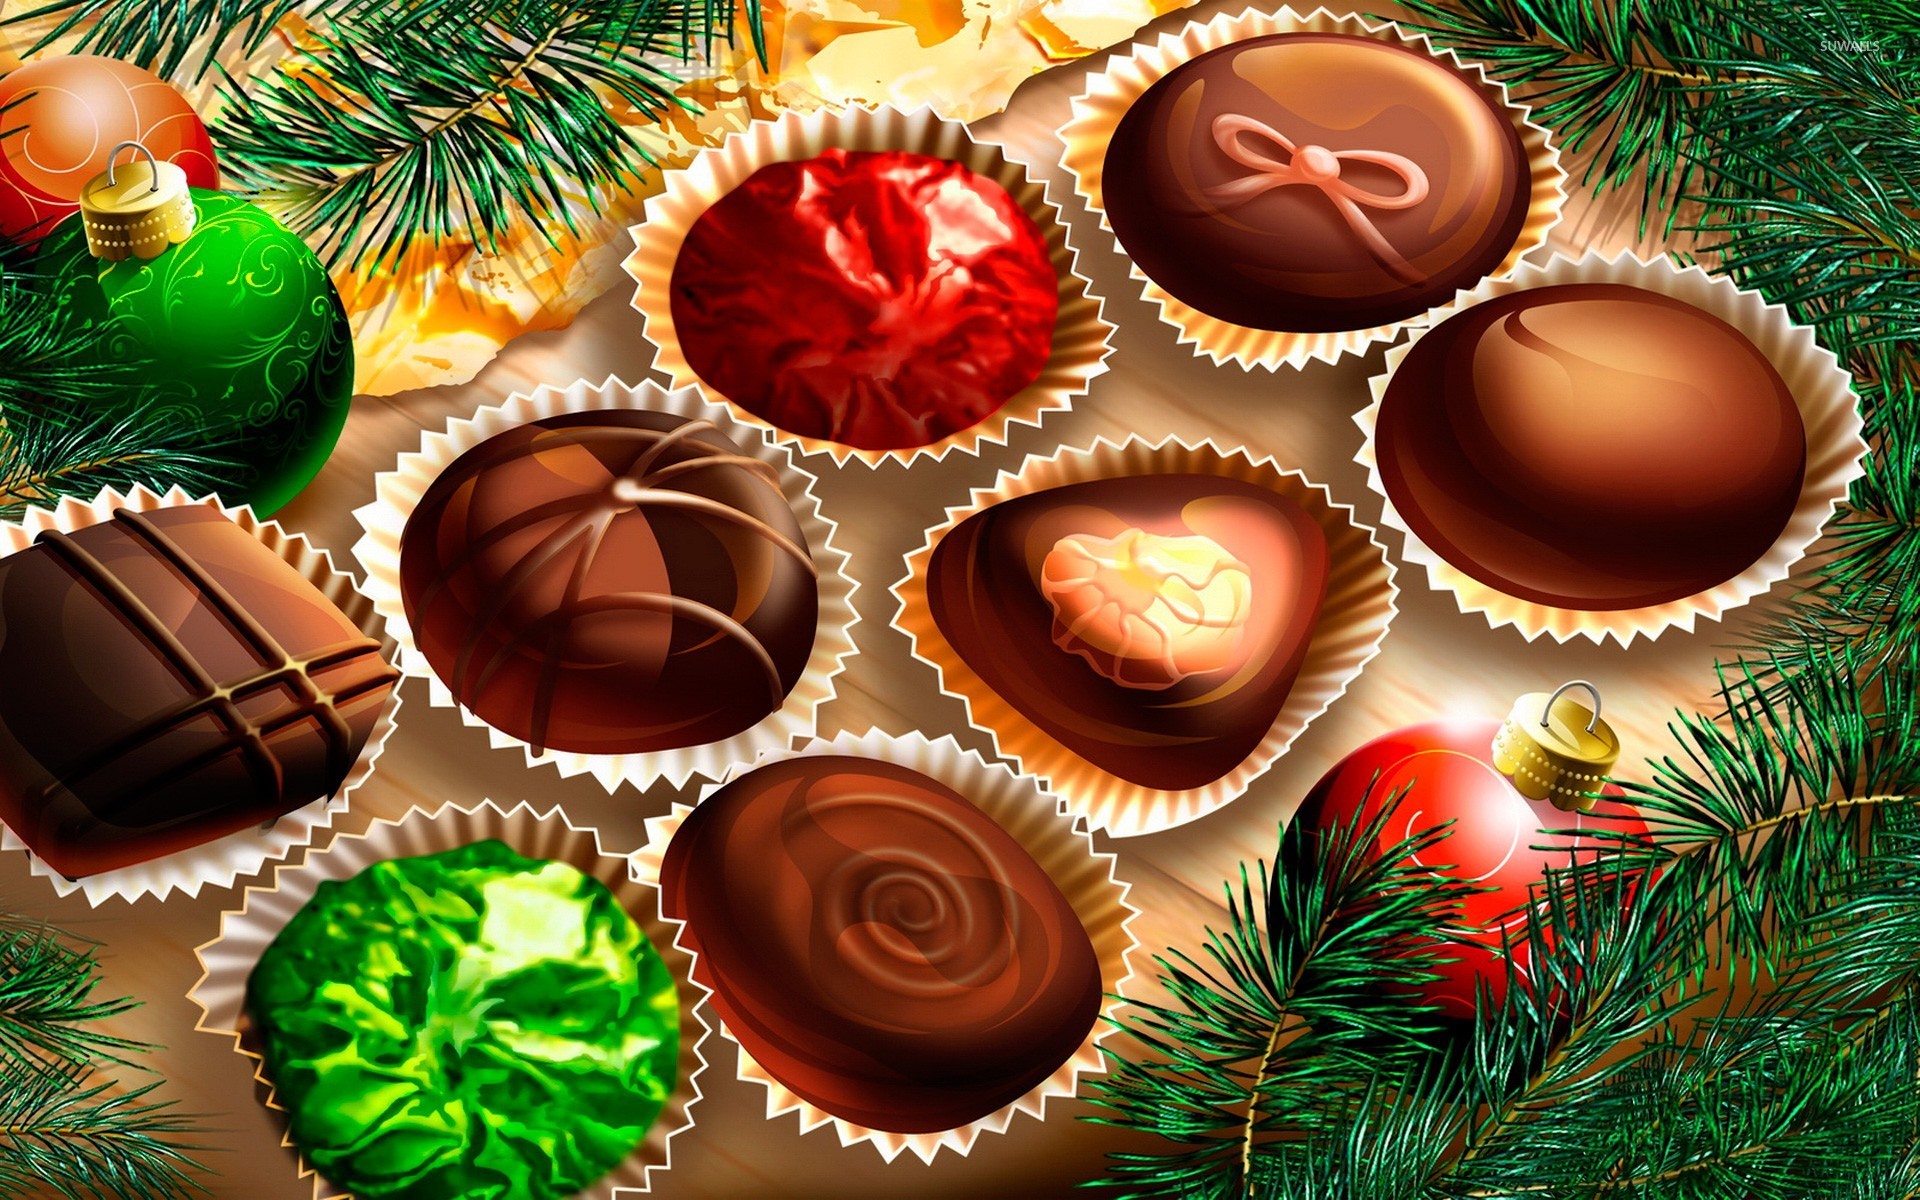 bon bon wallpaper,chocolate truffle,christmas ornament,confectionery,praline,food